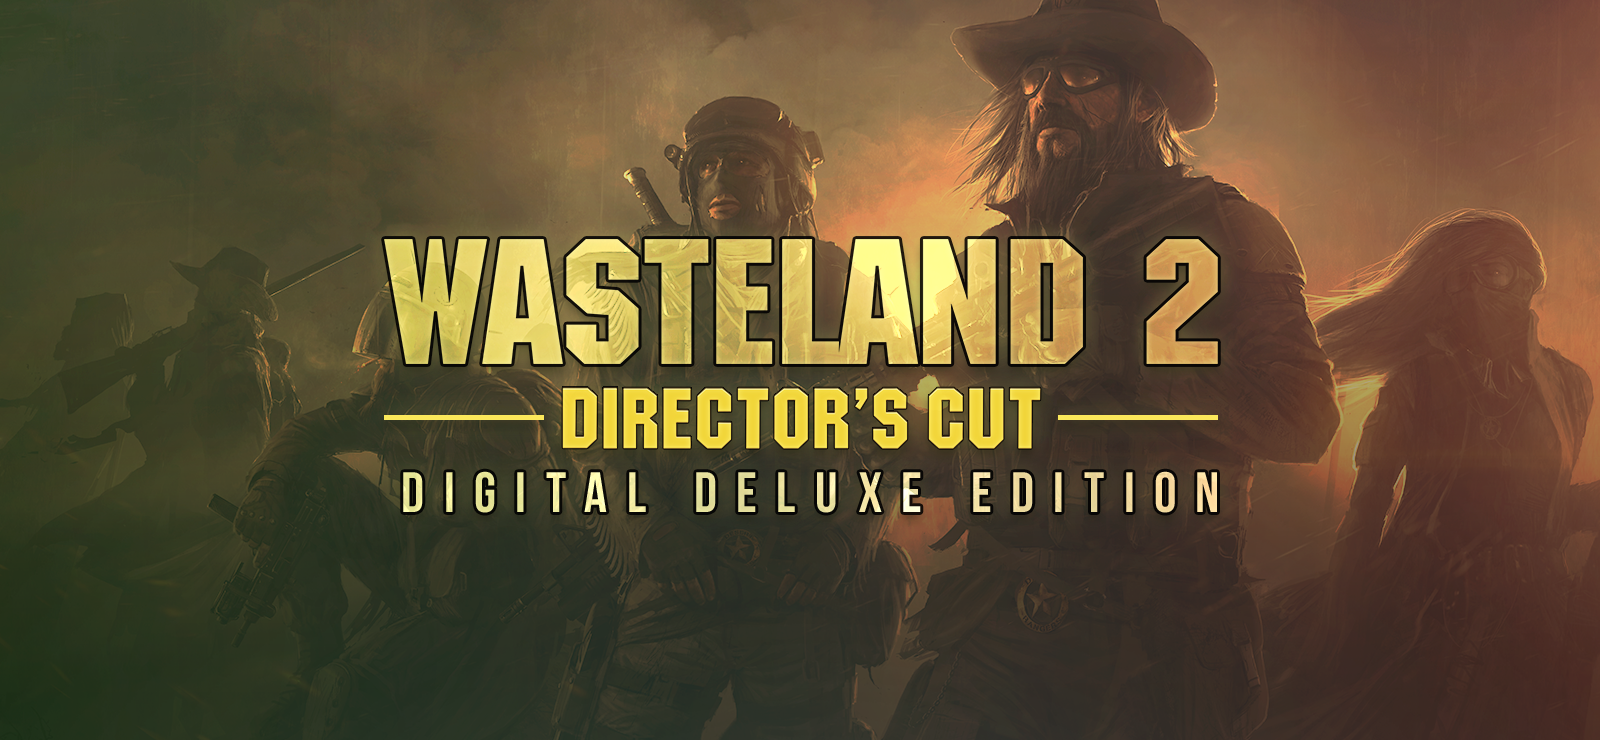 Wasteland 2 Director's Cut Digital Deluxe Edition